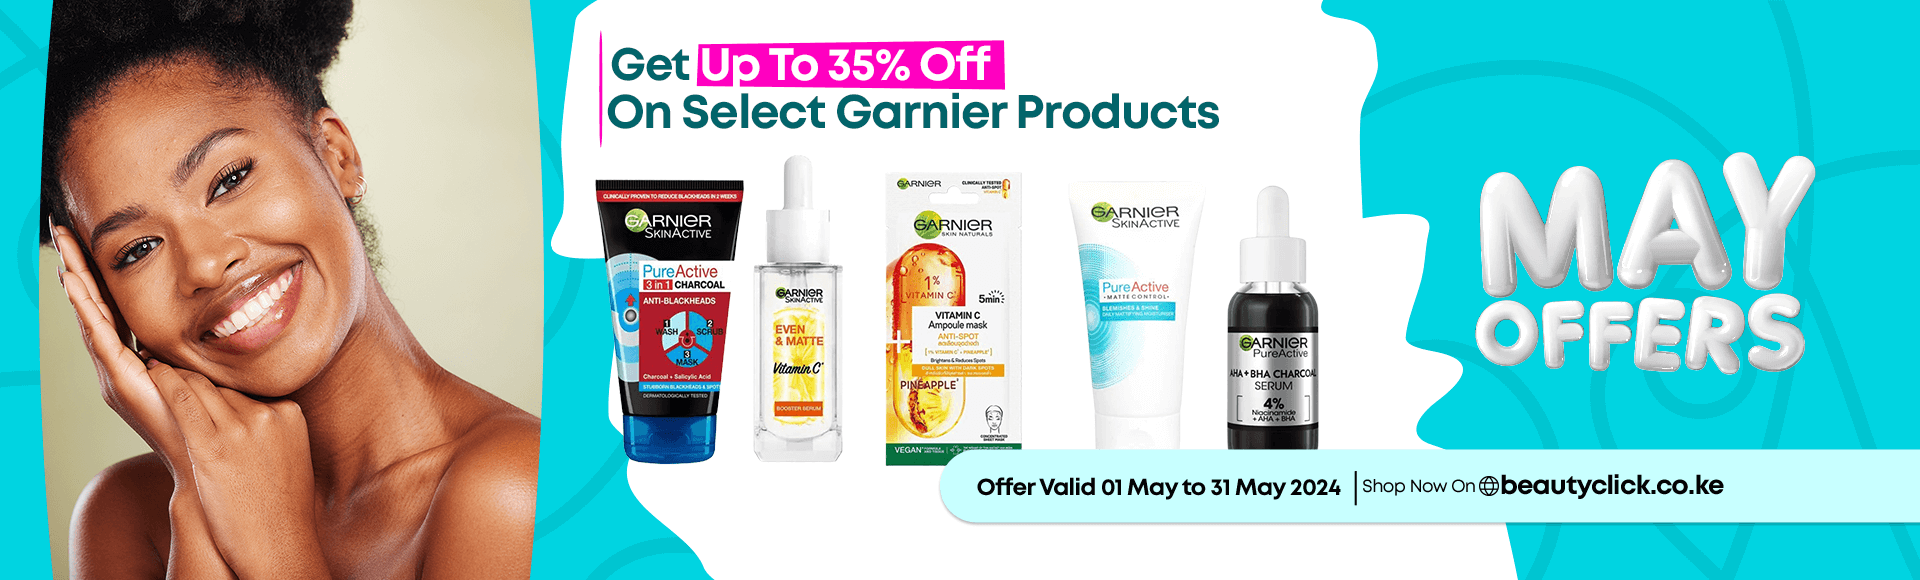 Garnier SkinActive 4% AHA + BHA & Niacinamide Charcoal Face Serum - 30ml